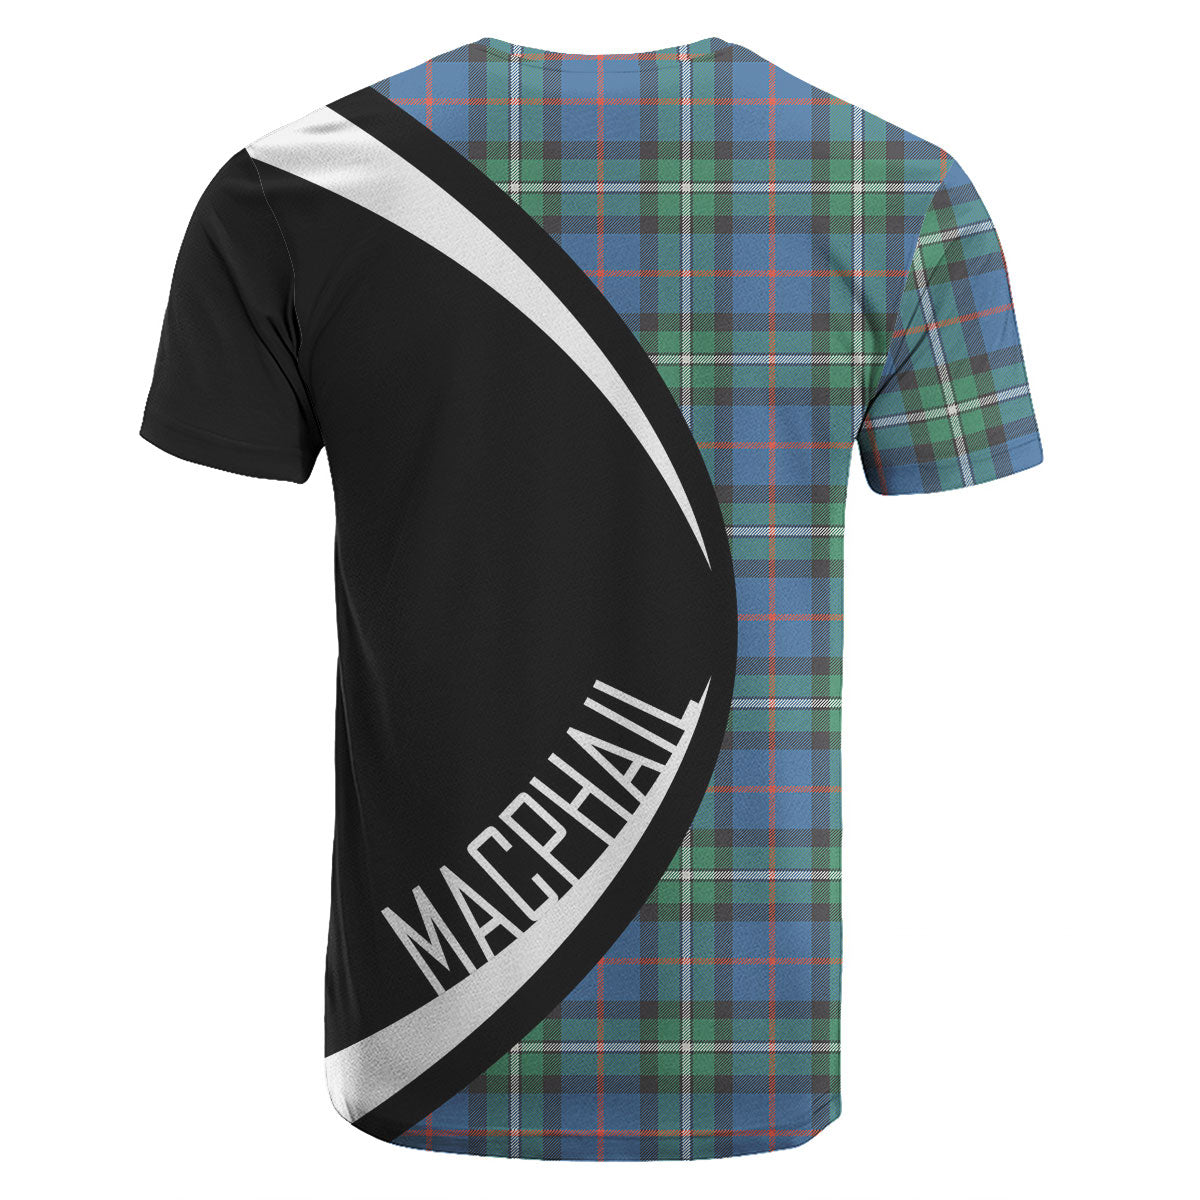 MacPhail Hunting Ancient Tartan Crest T-shirt - Circle Style